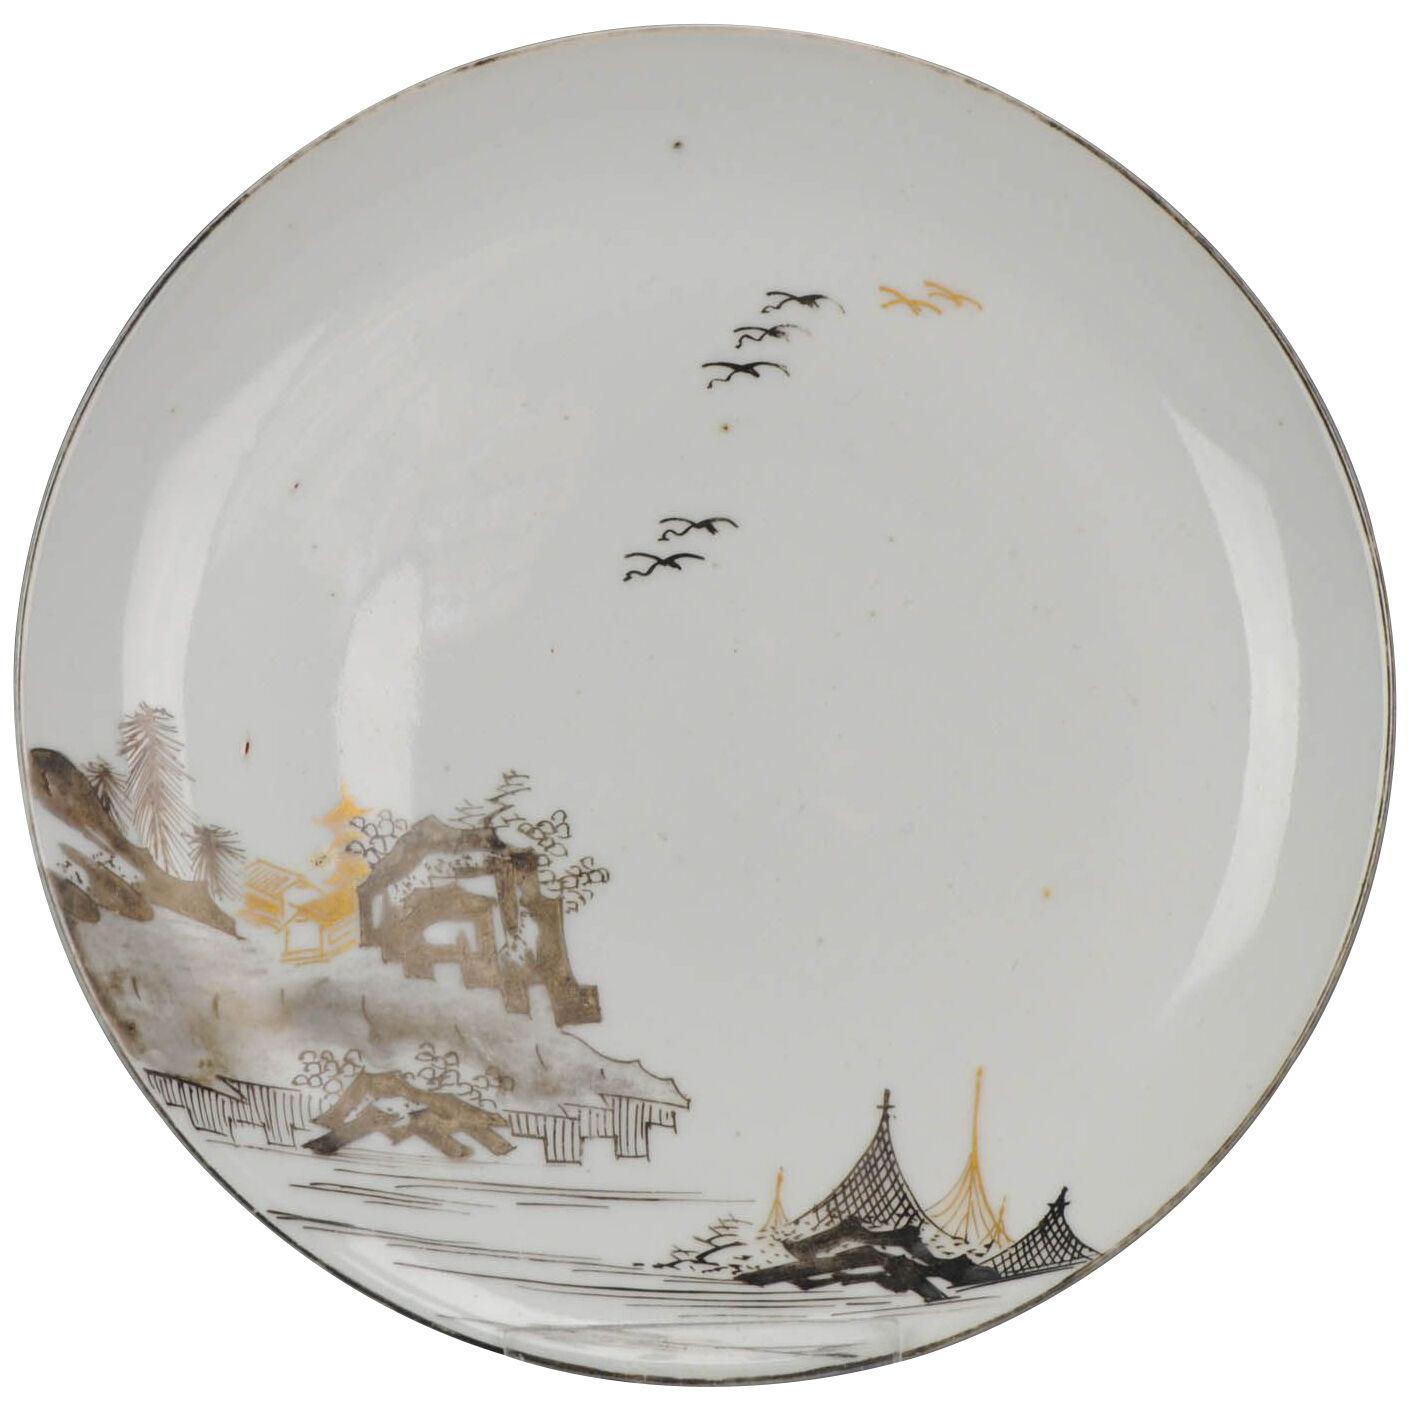 Antique 17th century Japanese Porcelain Plate 1660-1680 Ko-Imari Ko-kutani